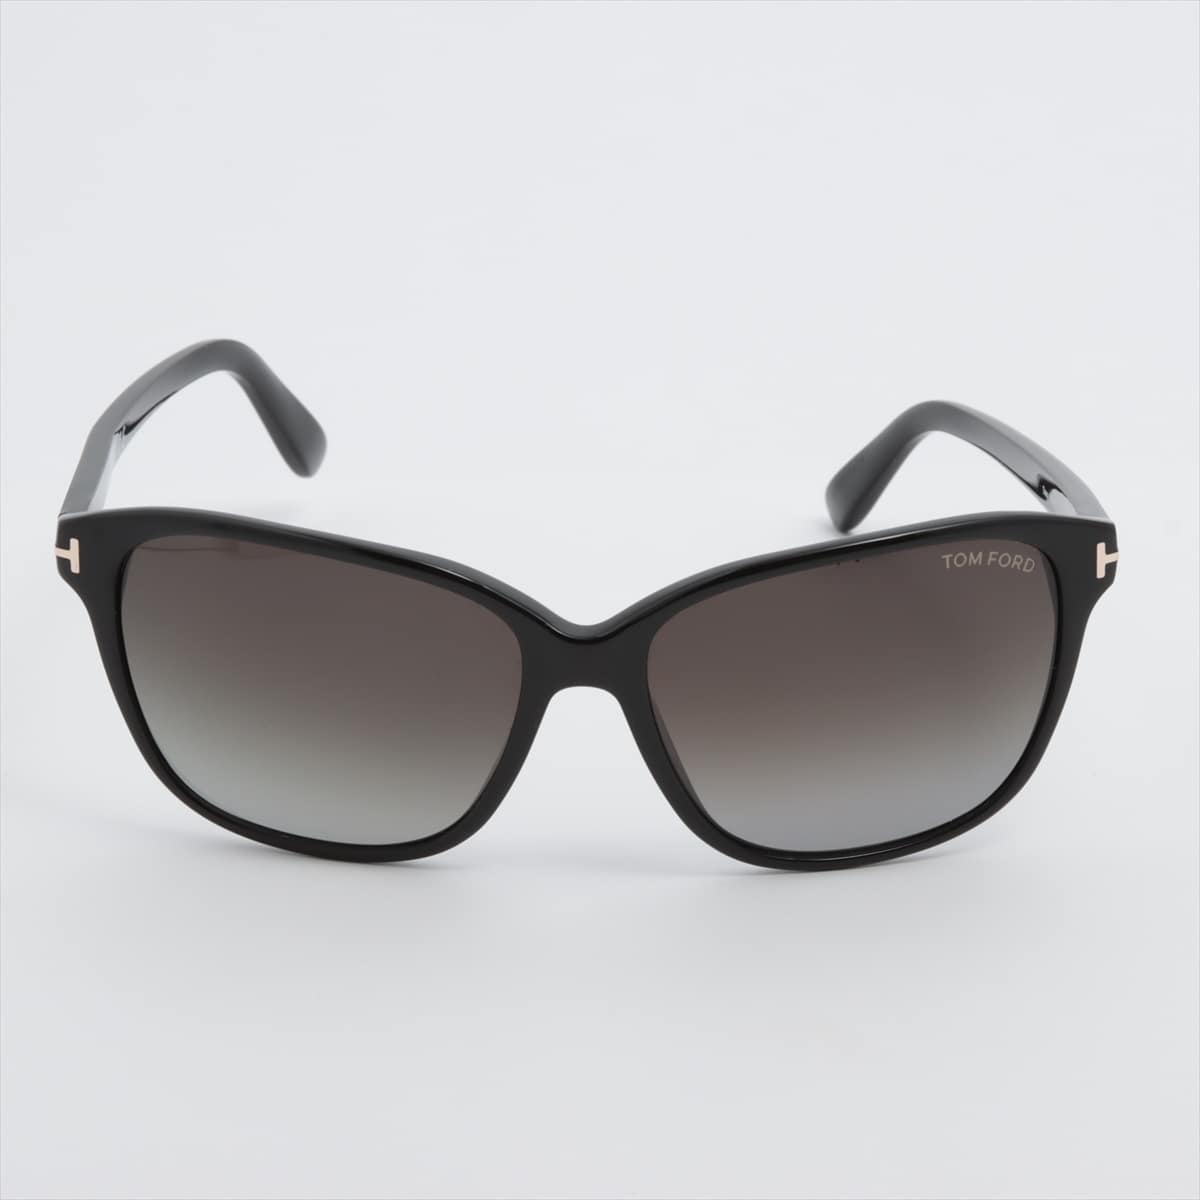 Tom Ford TF432 Sunglasses Plastic Black